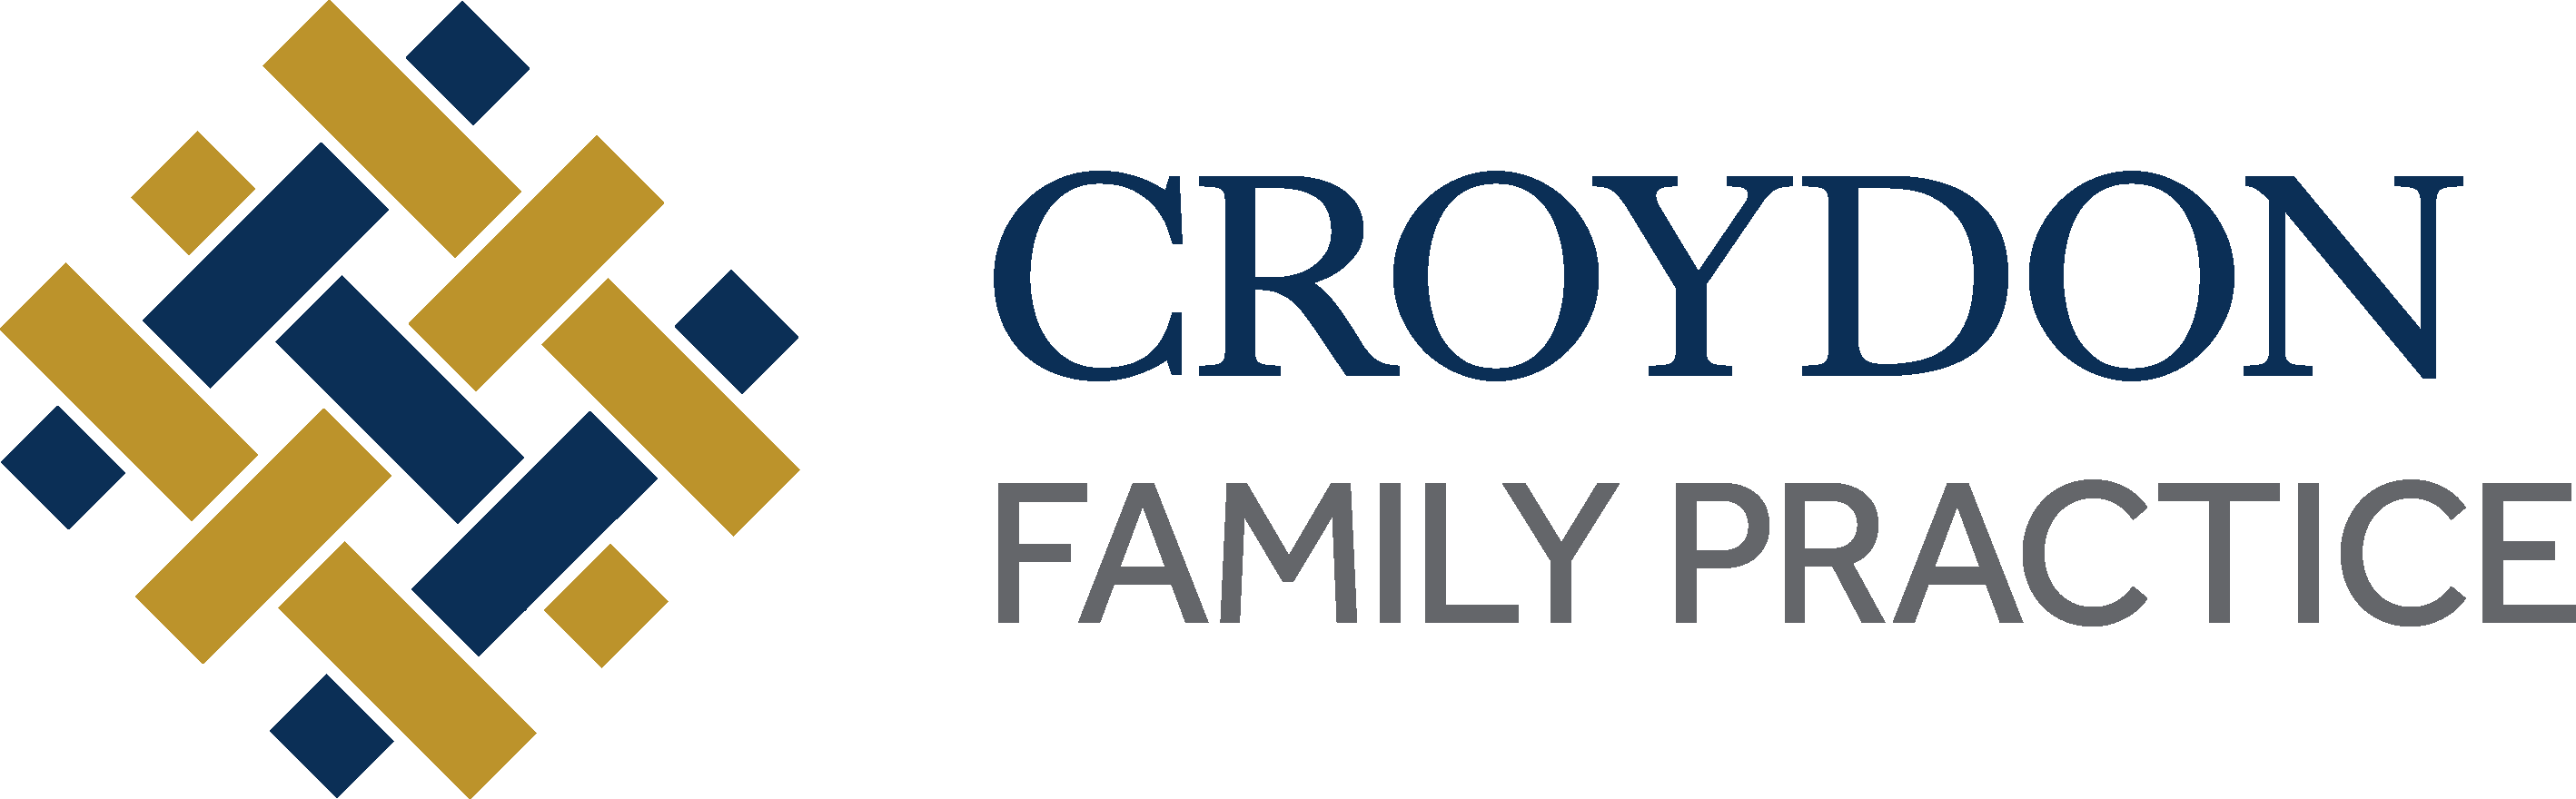 Croydon Family Practice